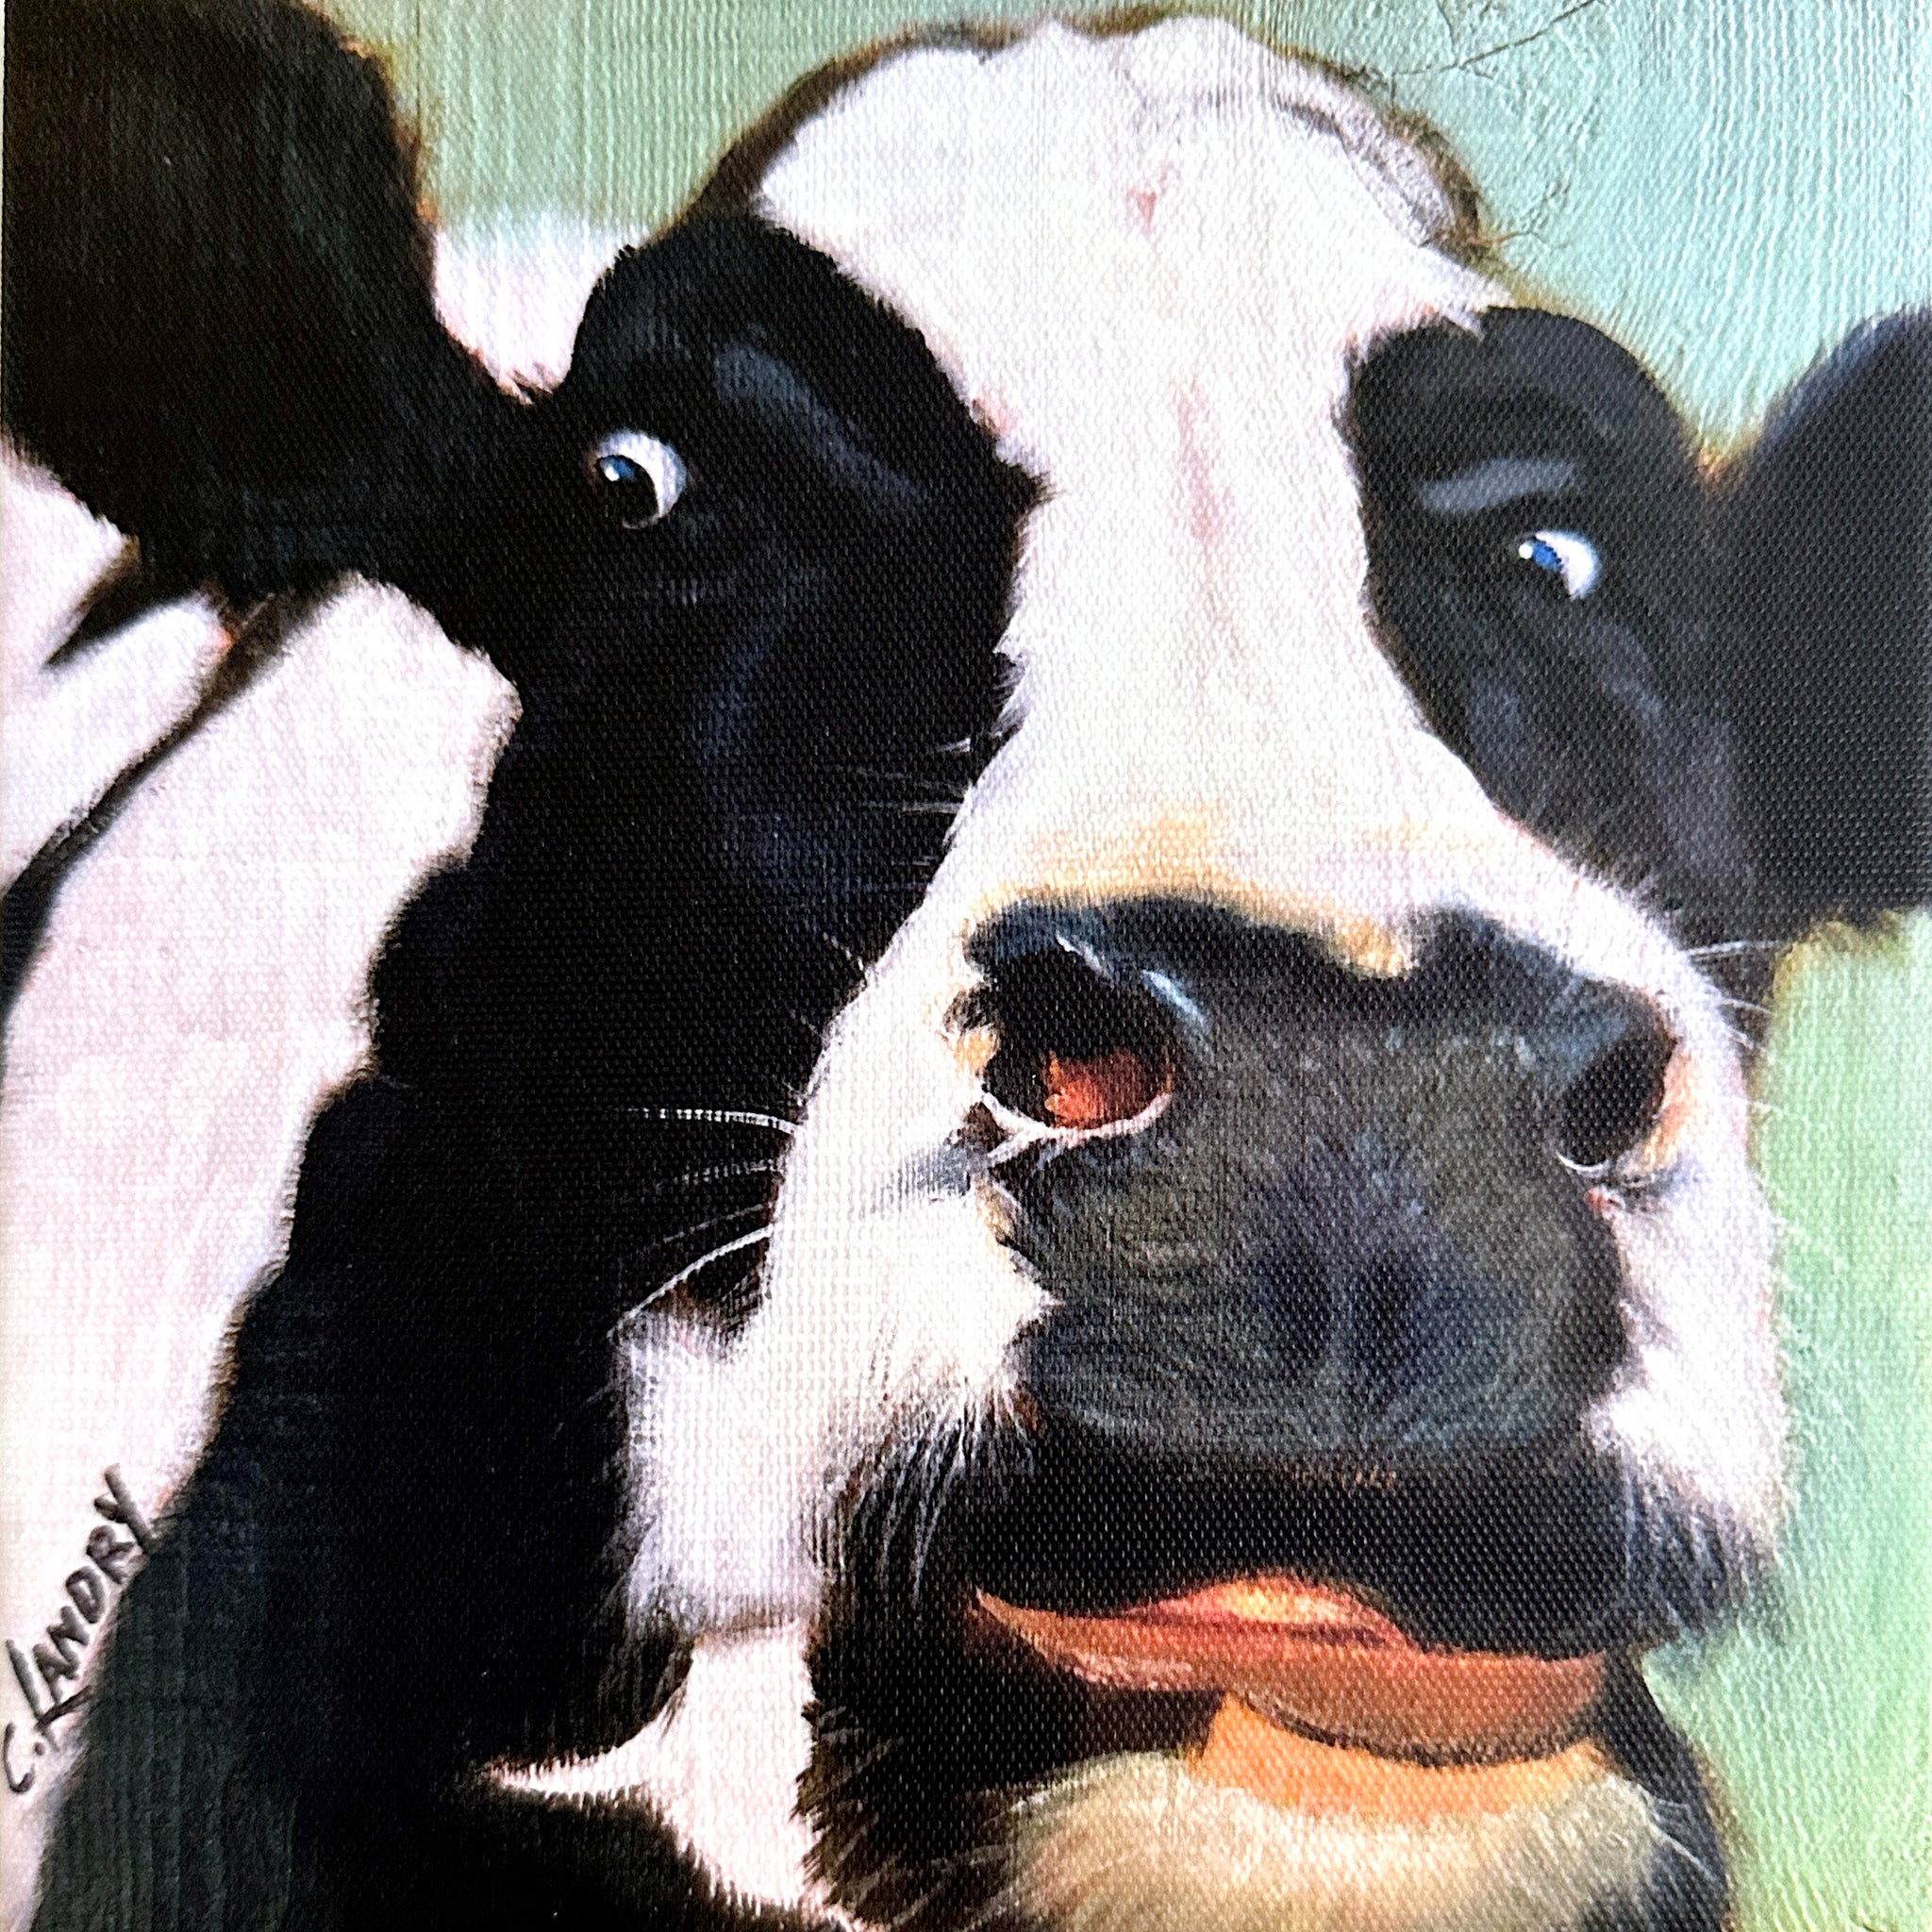 Cow Art, 'Ricky C', Painted by Ricky's Yiya, Artist Carol Landry, 8"x 8" Collection